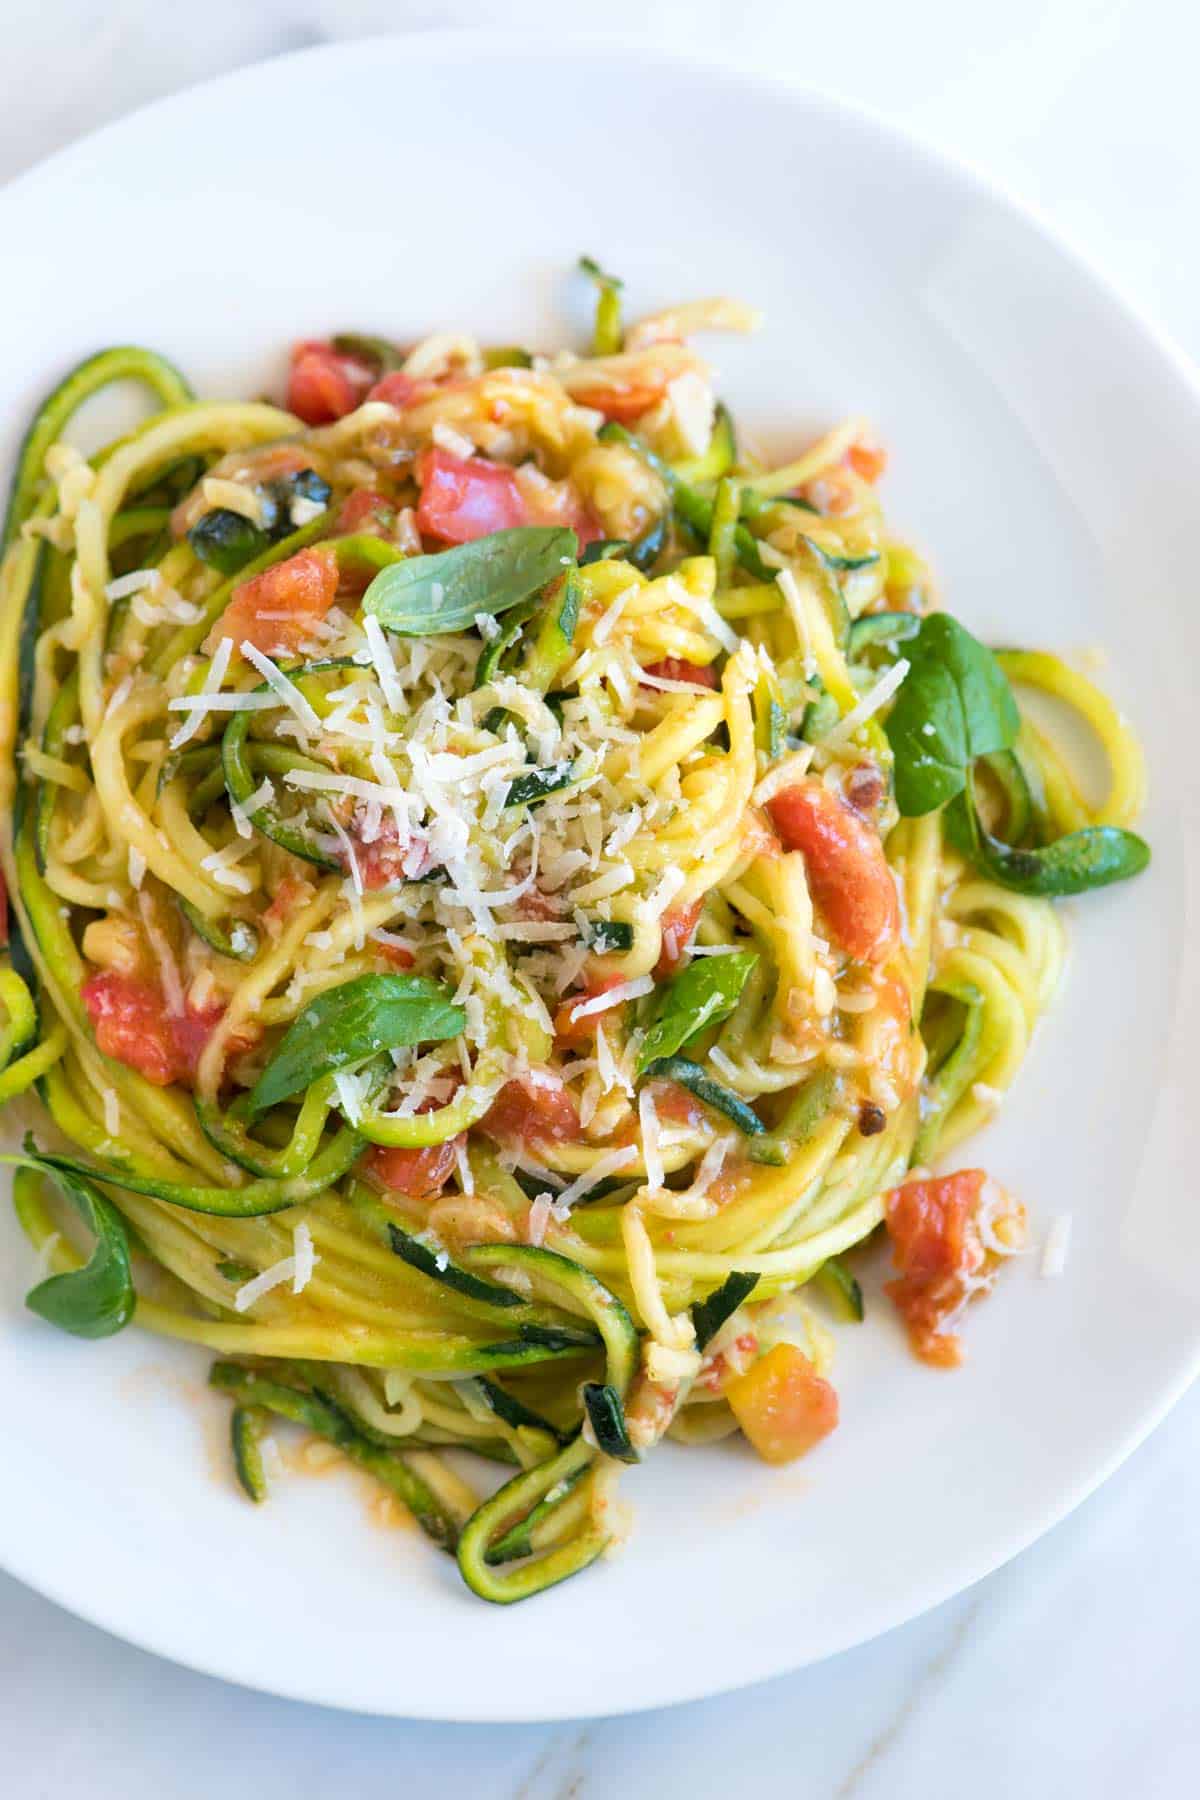 https://www.inspiredtaste.net/wp-content/uploads/2016/08/Zucchini-Pasta-Recipe-1.jpg